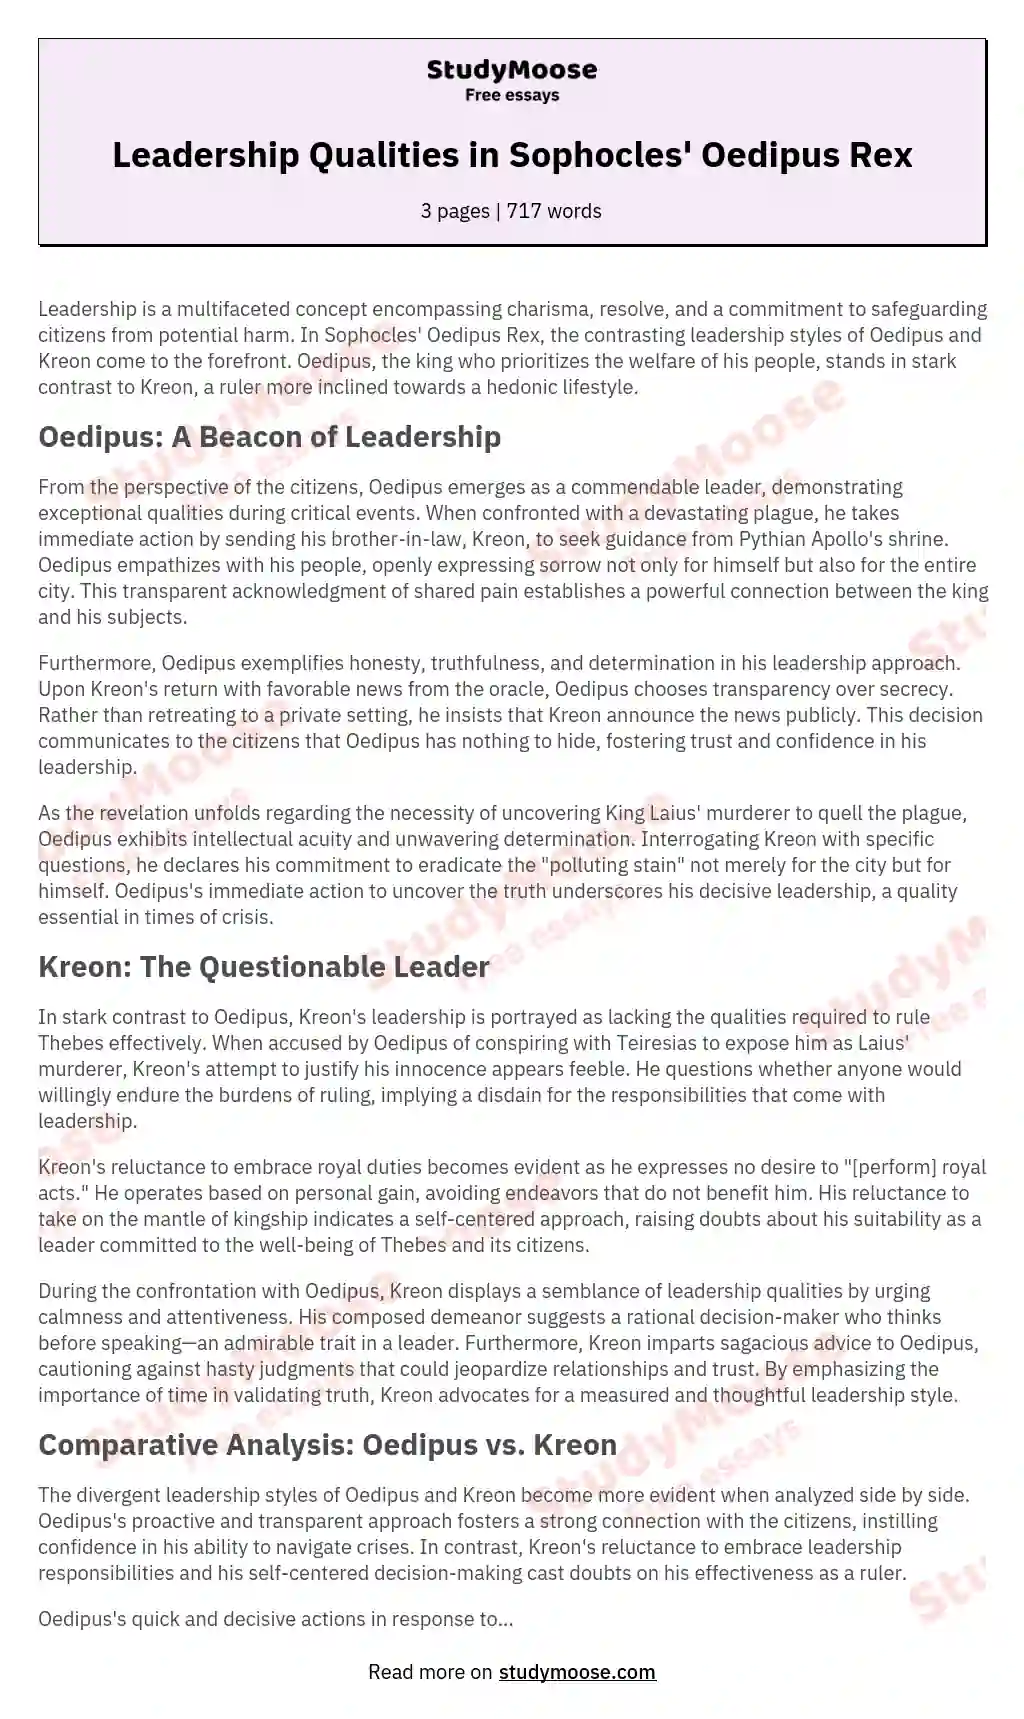 The Leadership Qualities of Oedipus and Kreon